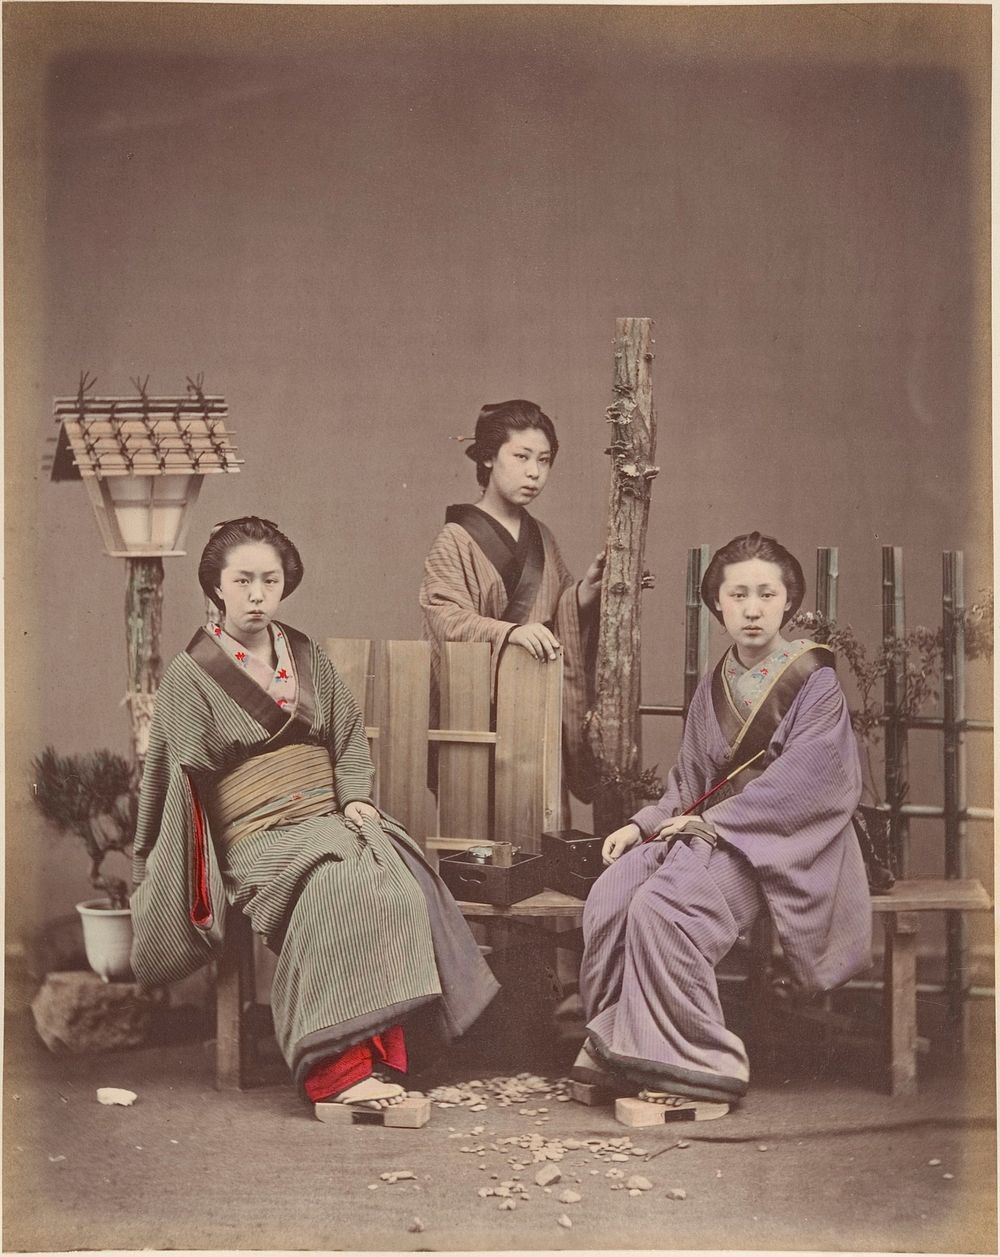 Japanese Women in Traditional Dress by Suzuki Shin'ichi